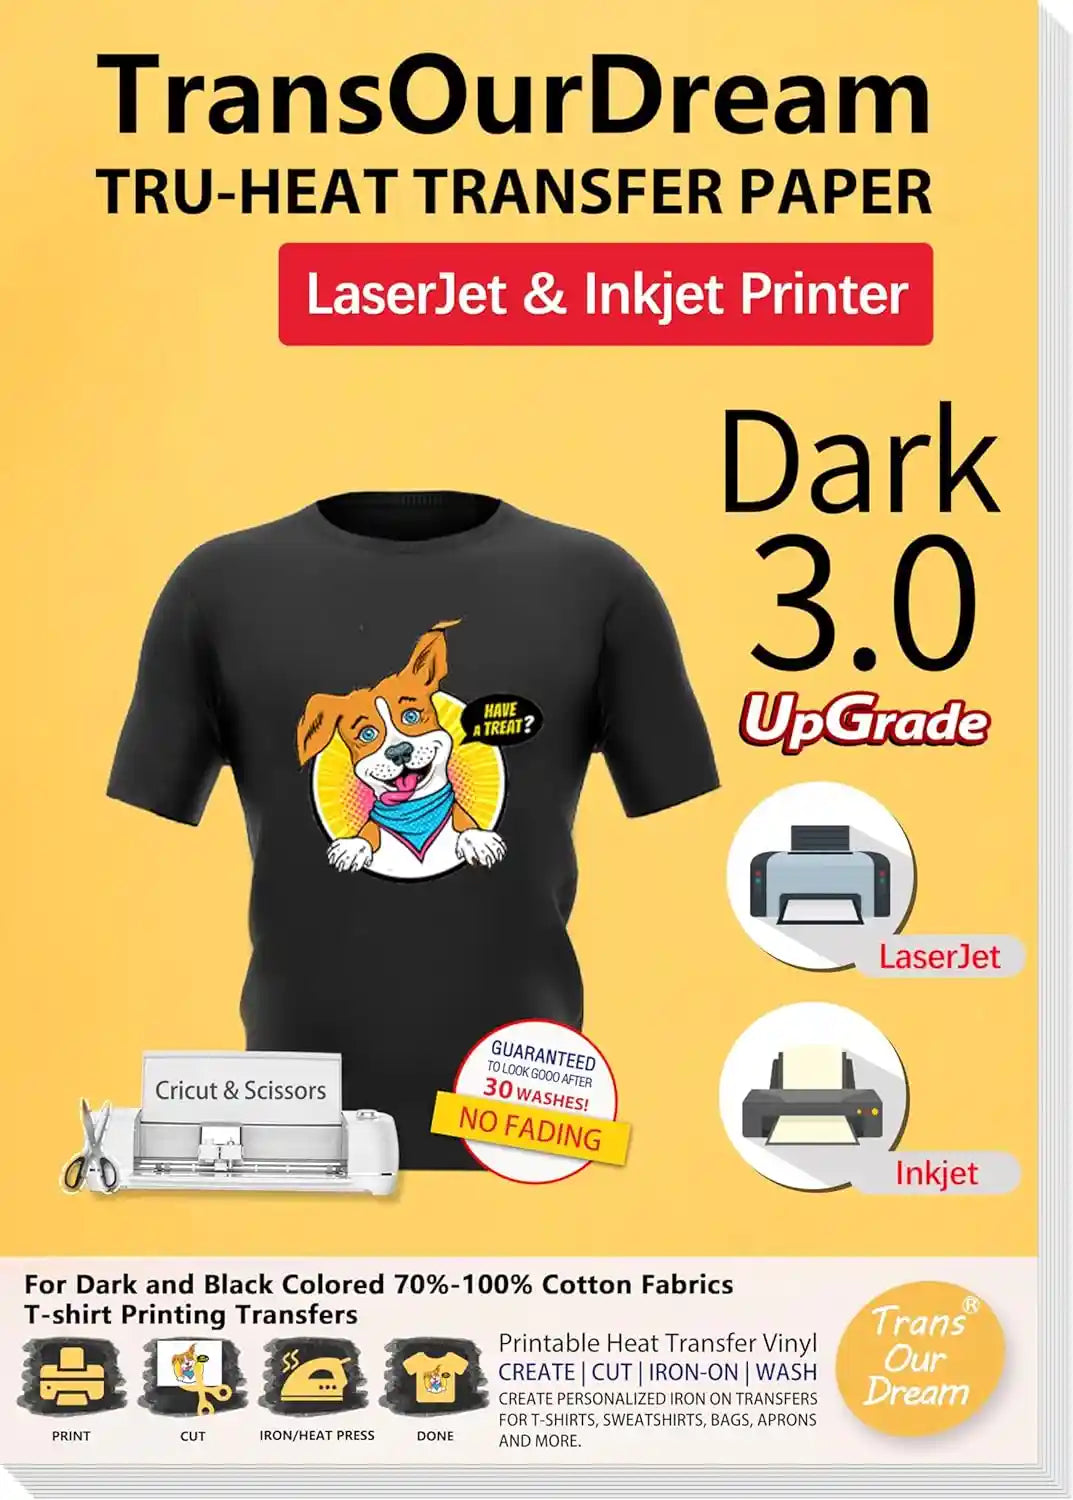 TransOurDream Gold Printable Temporary Tattoo Transfer Paper for Inkjet &  Laser Printer (A+B per